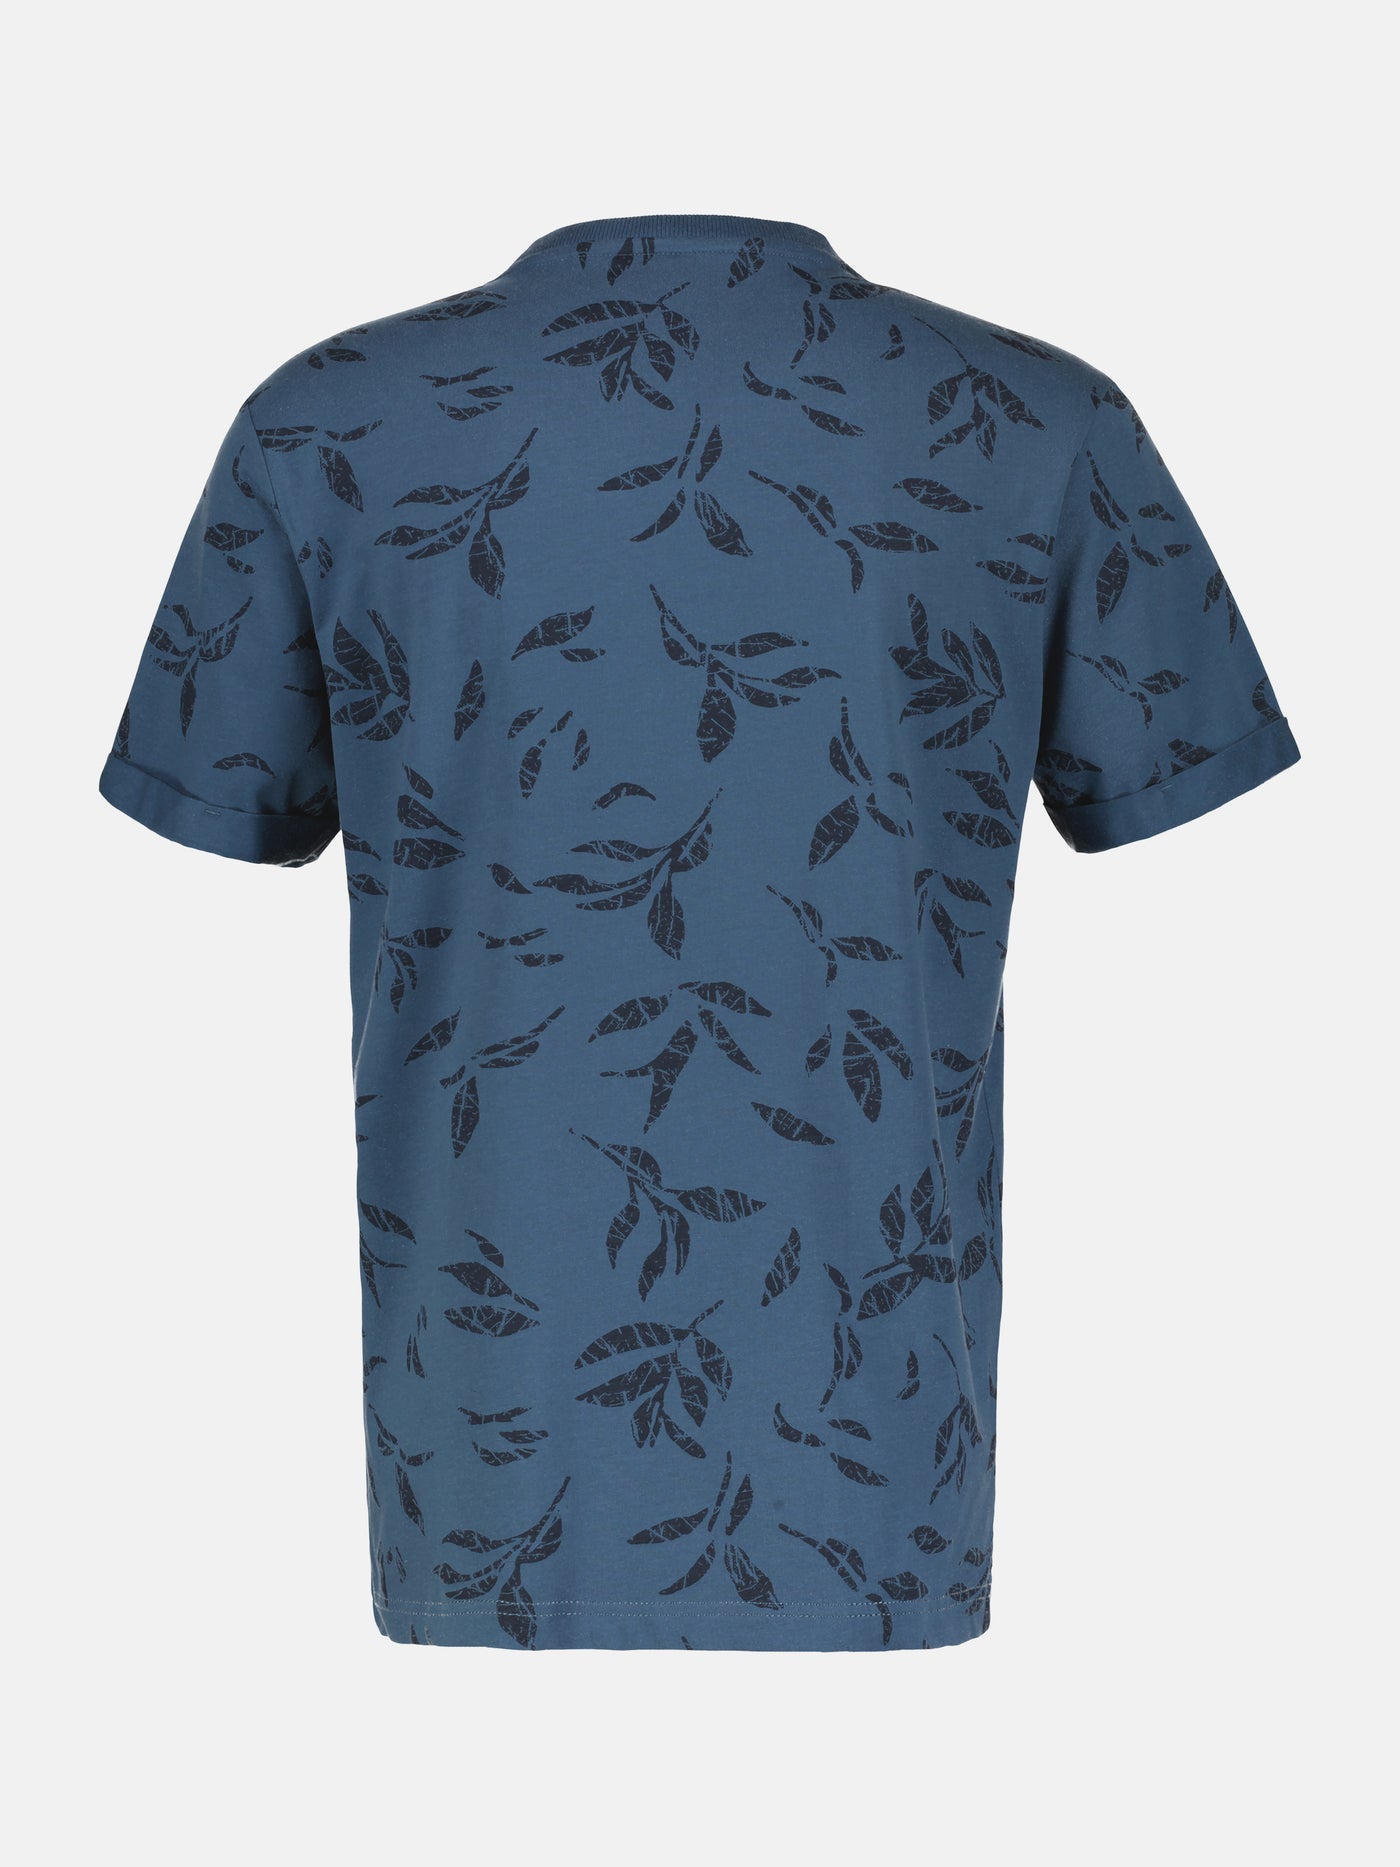 Herren T-Shirt mit floralem Print